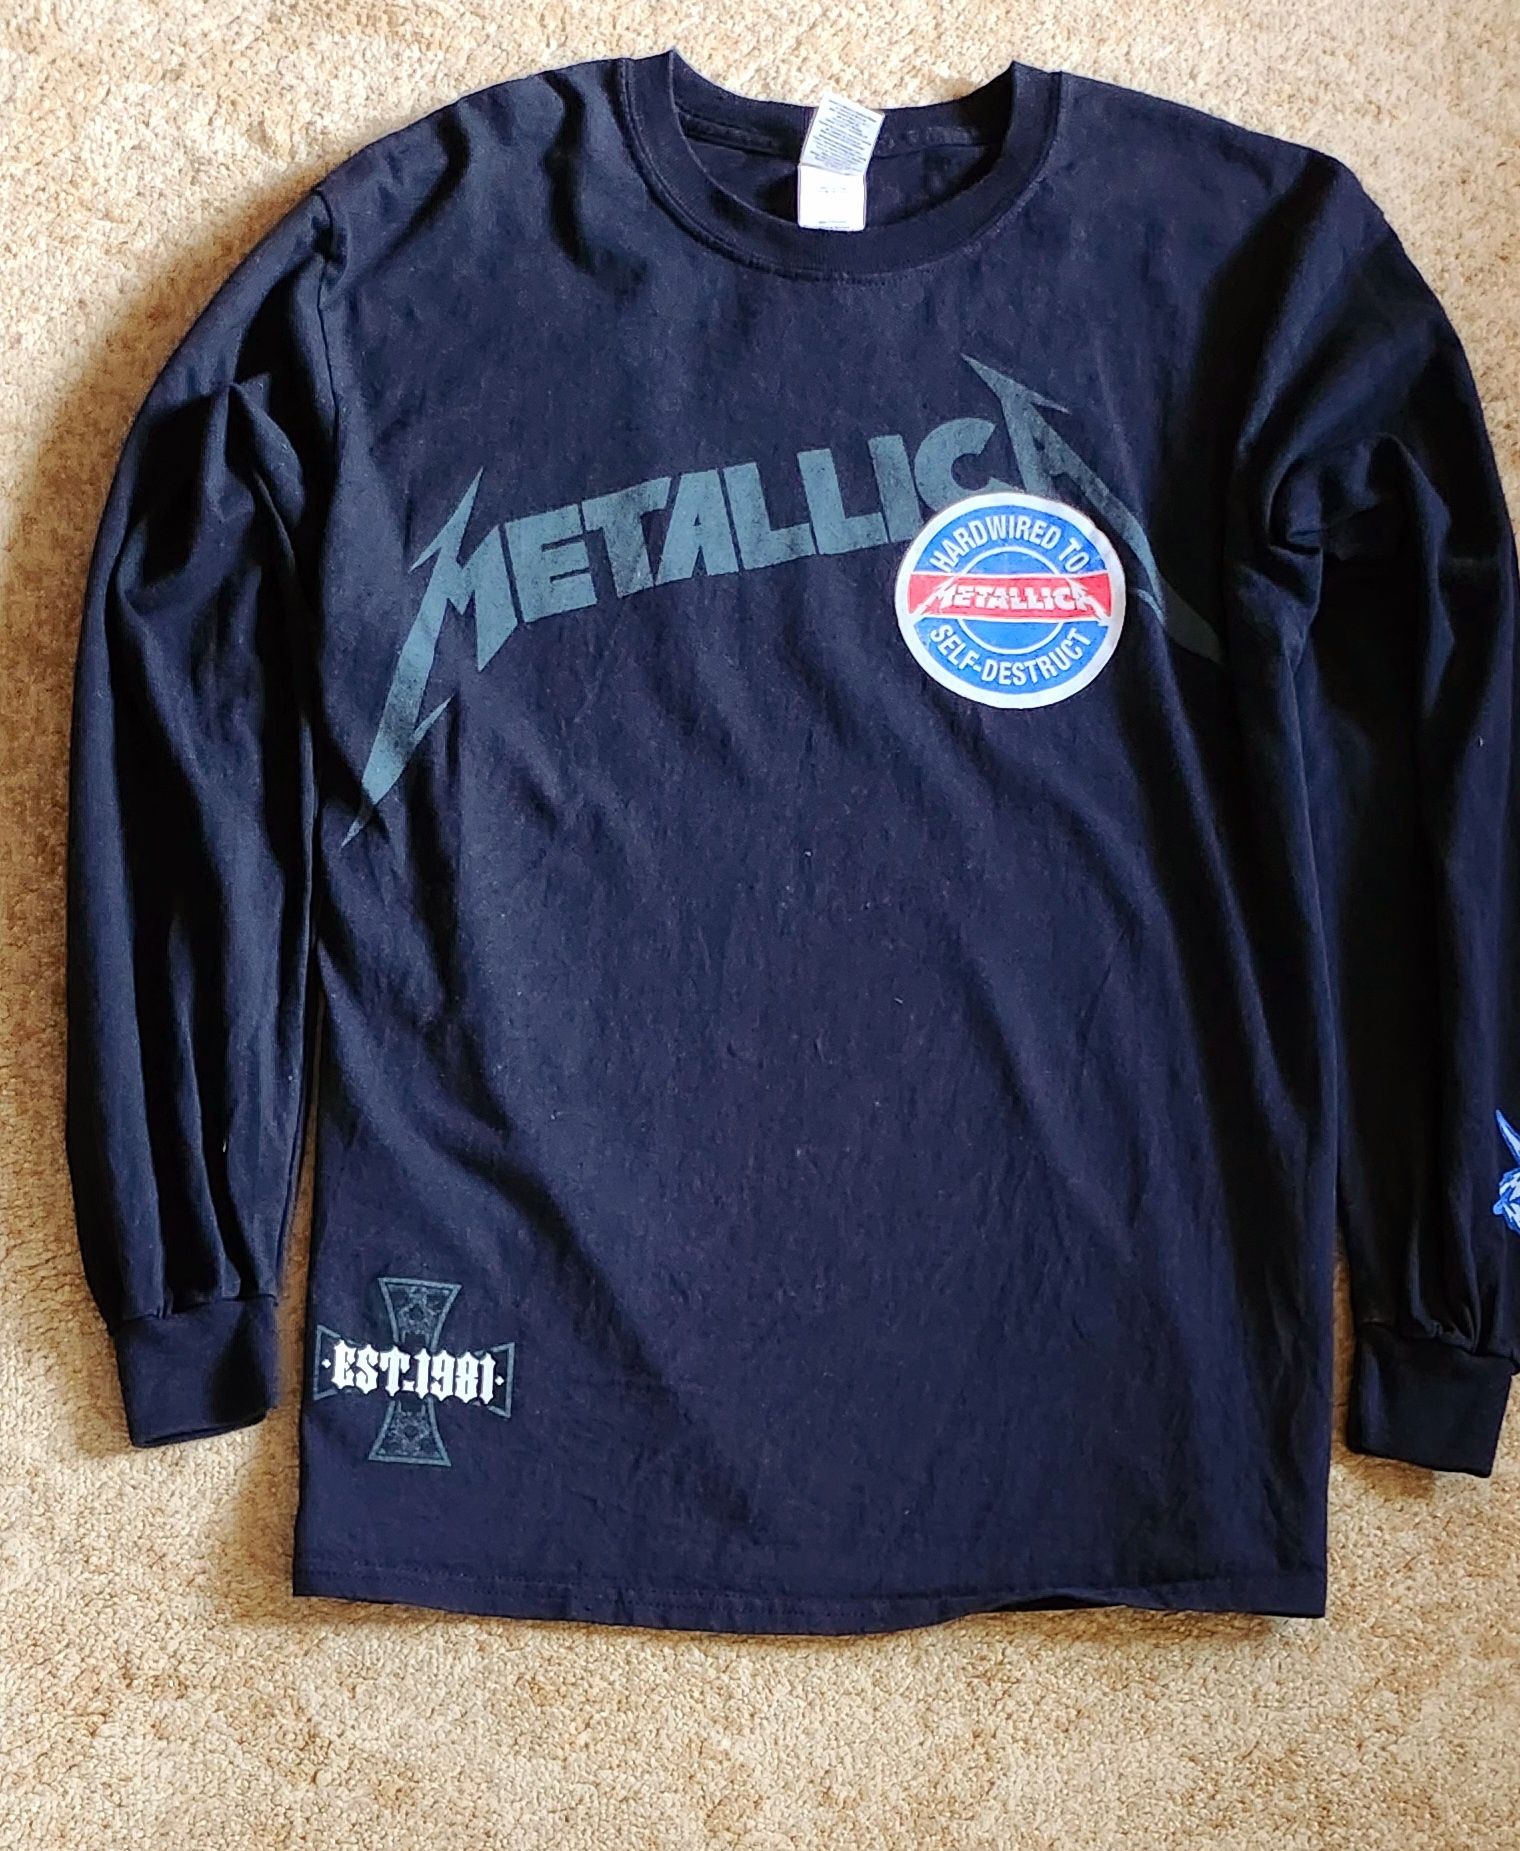 Metallica bluza L